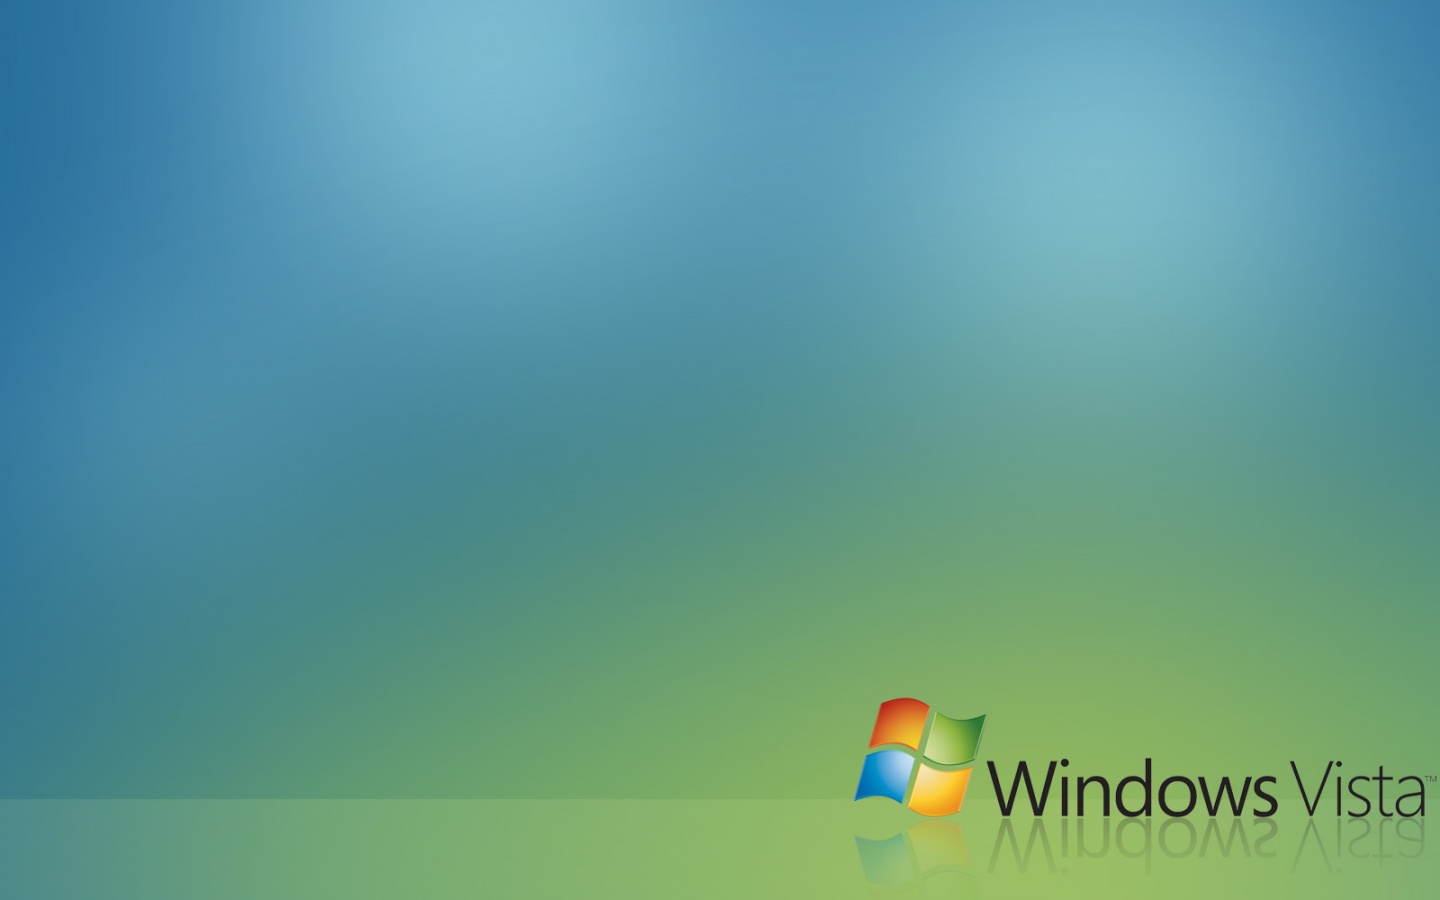 Windows Vista Desktop Pc And Mac Wallpaper